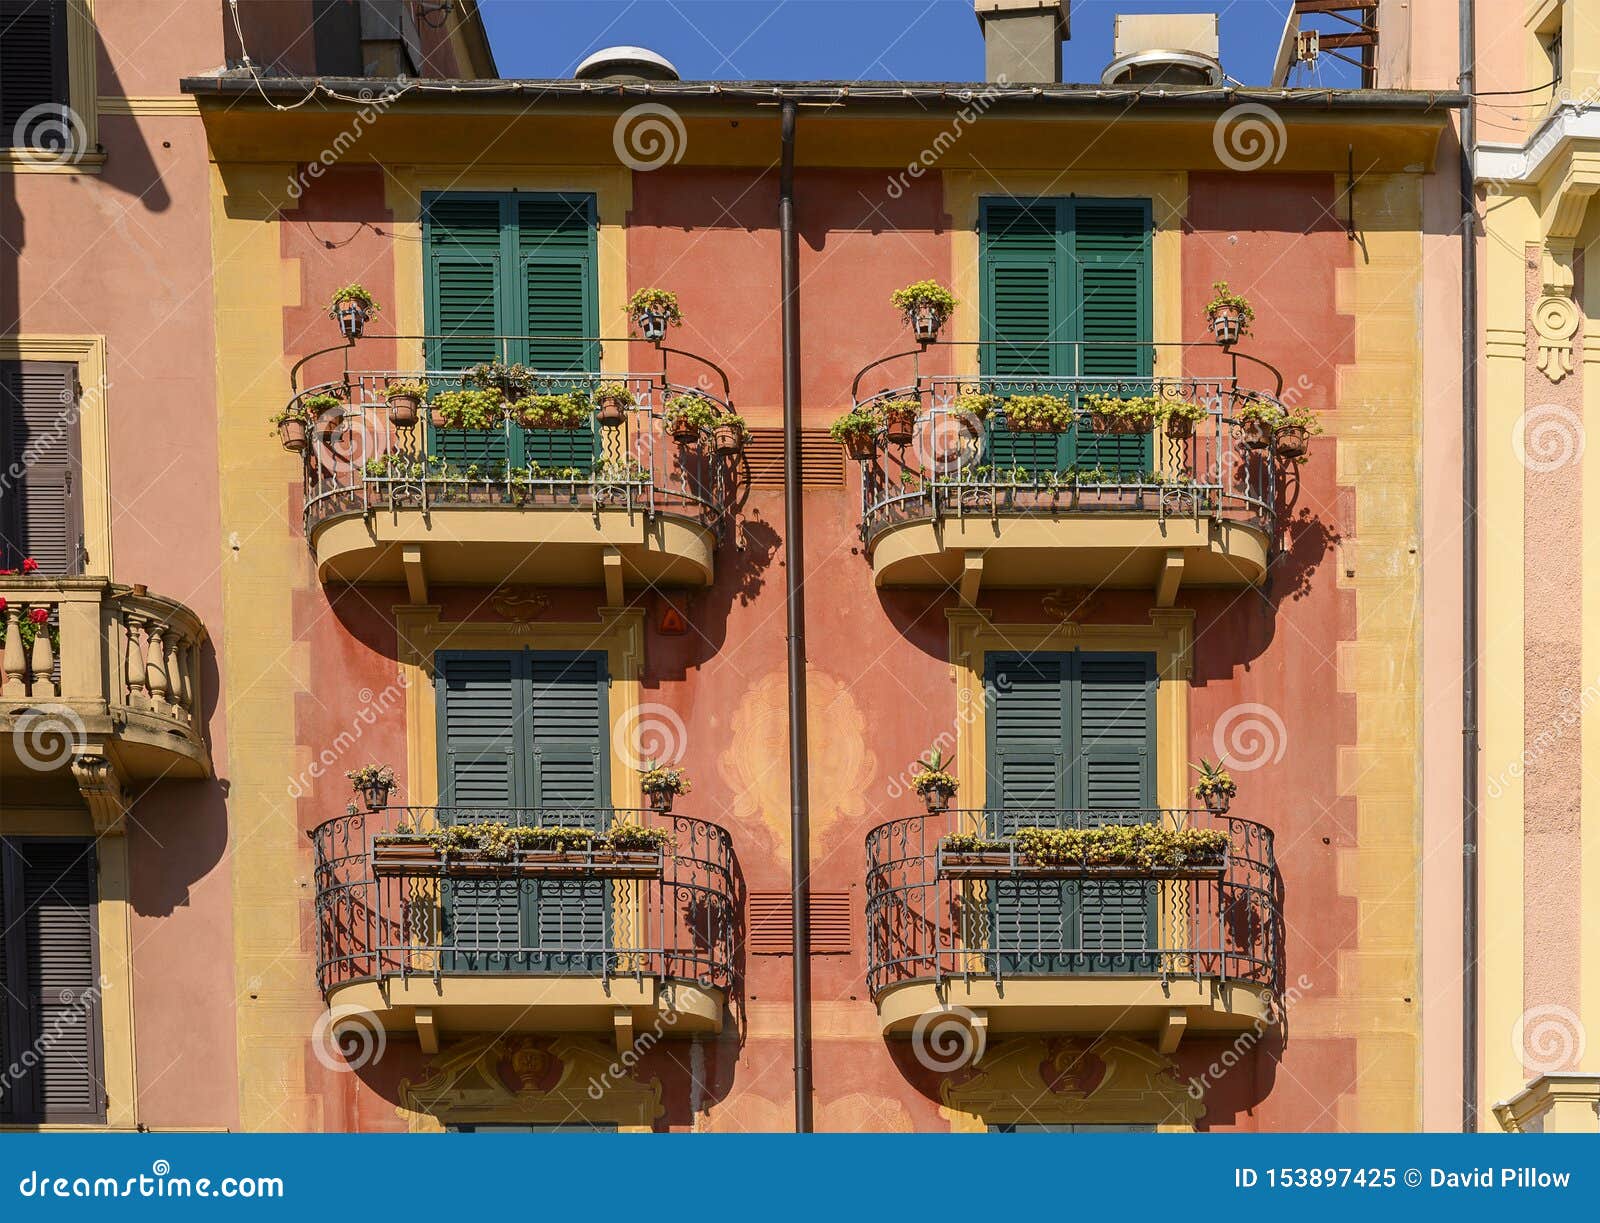 terraces on painted residences along the promenade of santa margherita ligure, italy